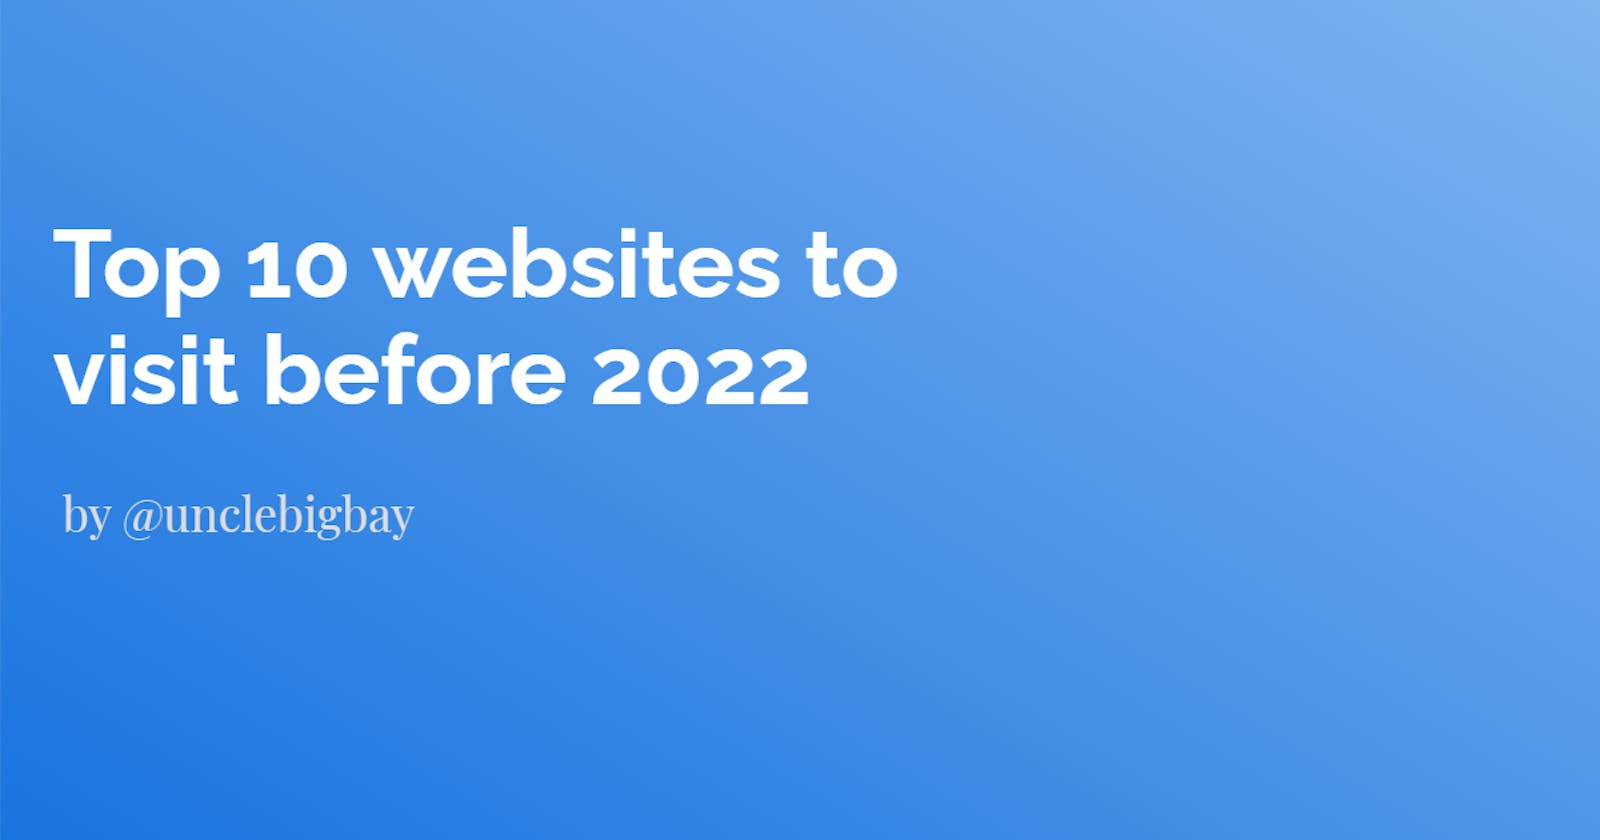 Top 10 websites to visit before 2022